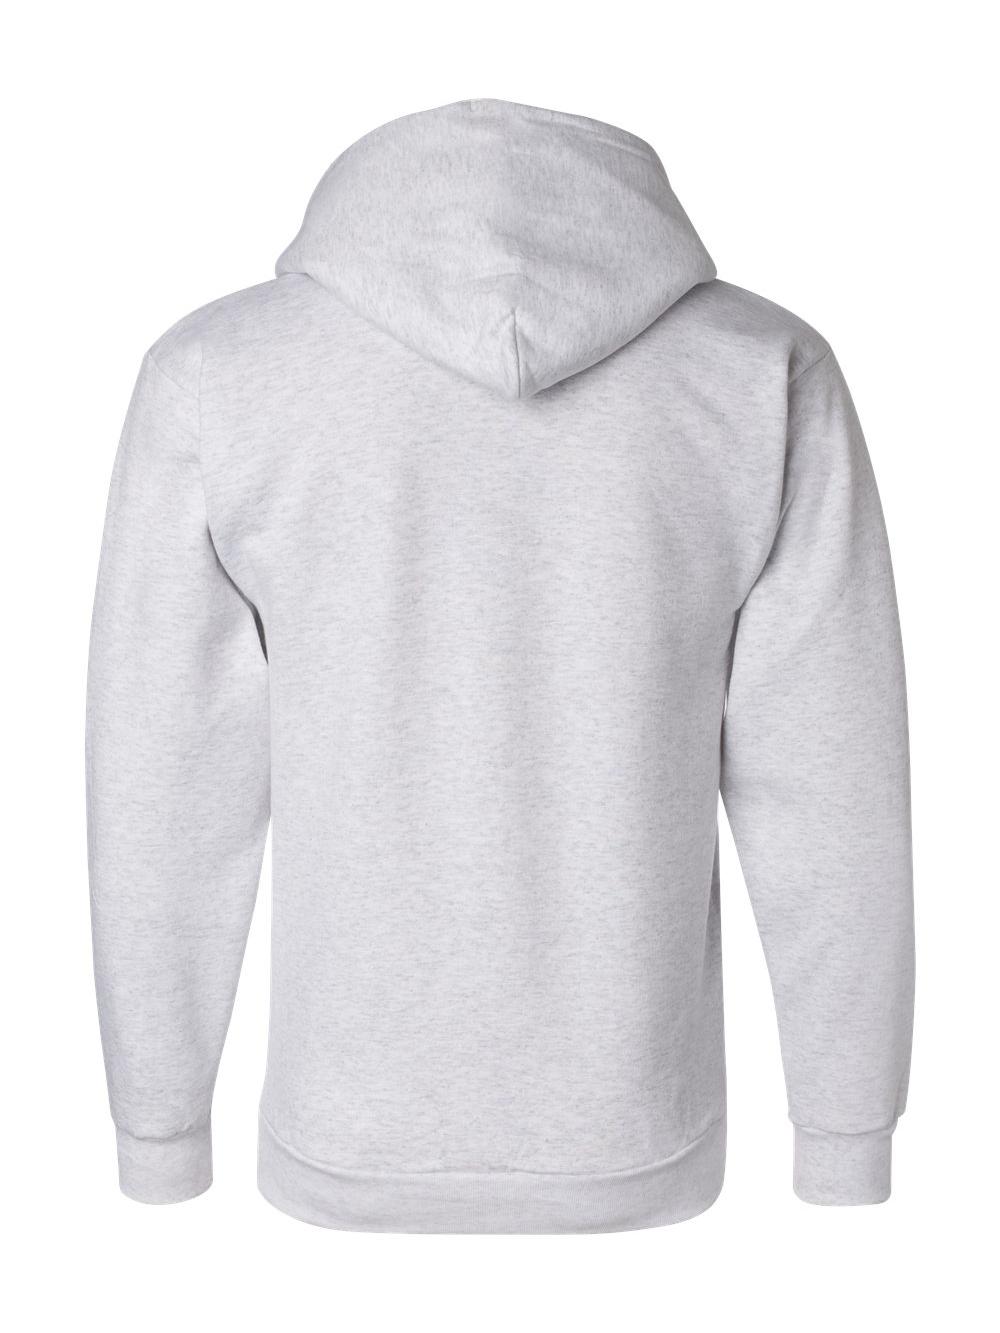 S700 Hoodie Sweatshirt 9 oz. EcoSmart Pullover - image 3 of 3